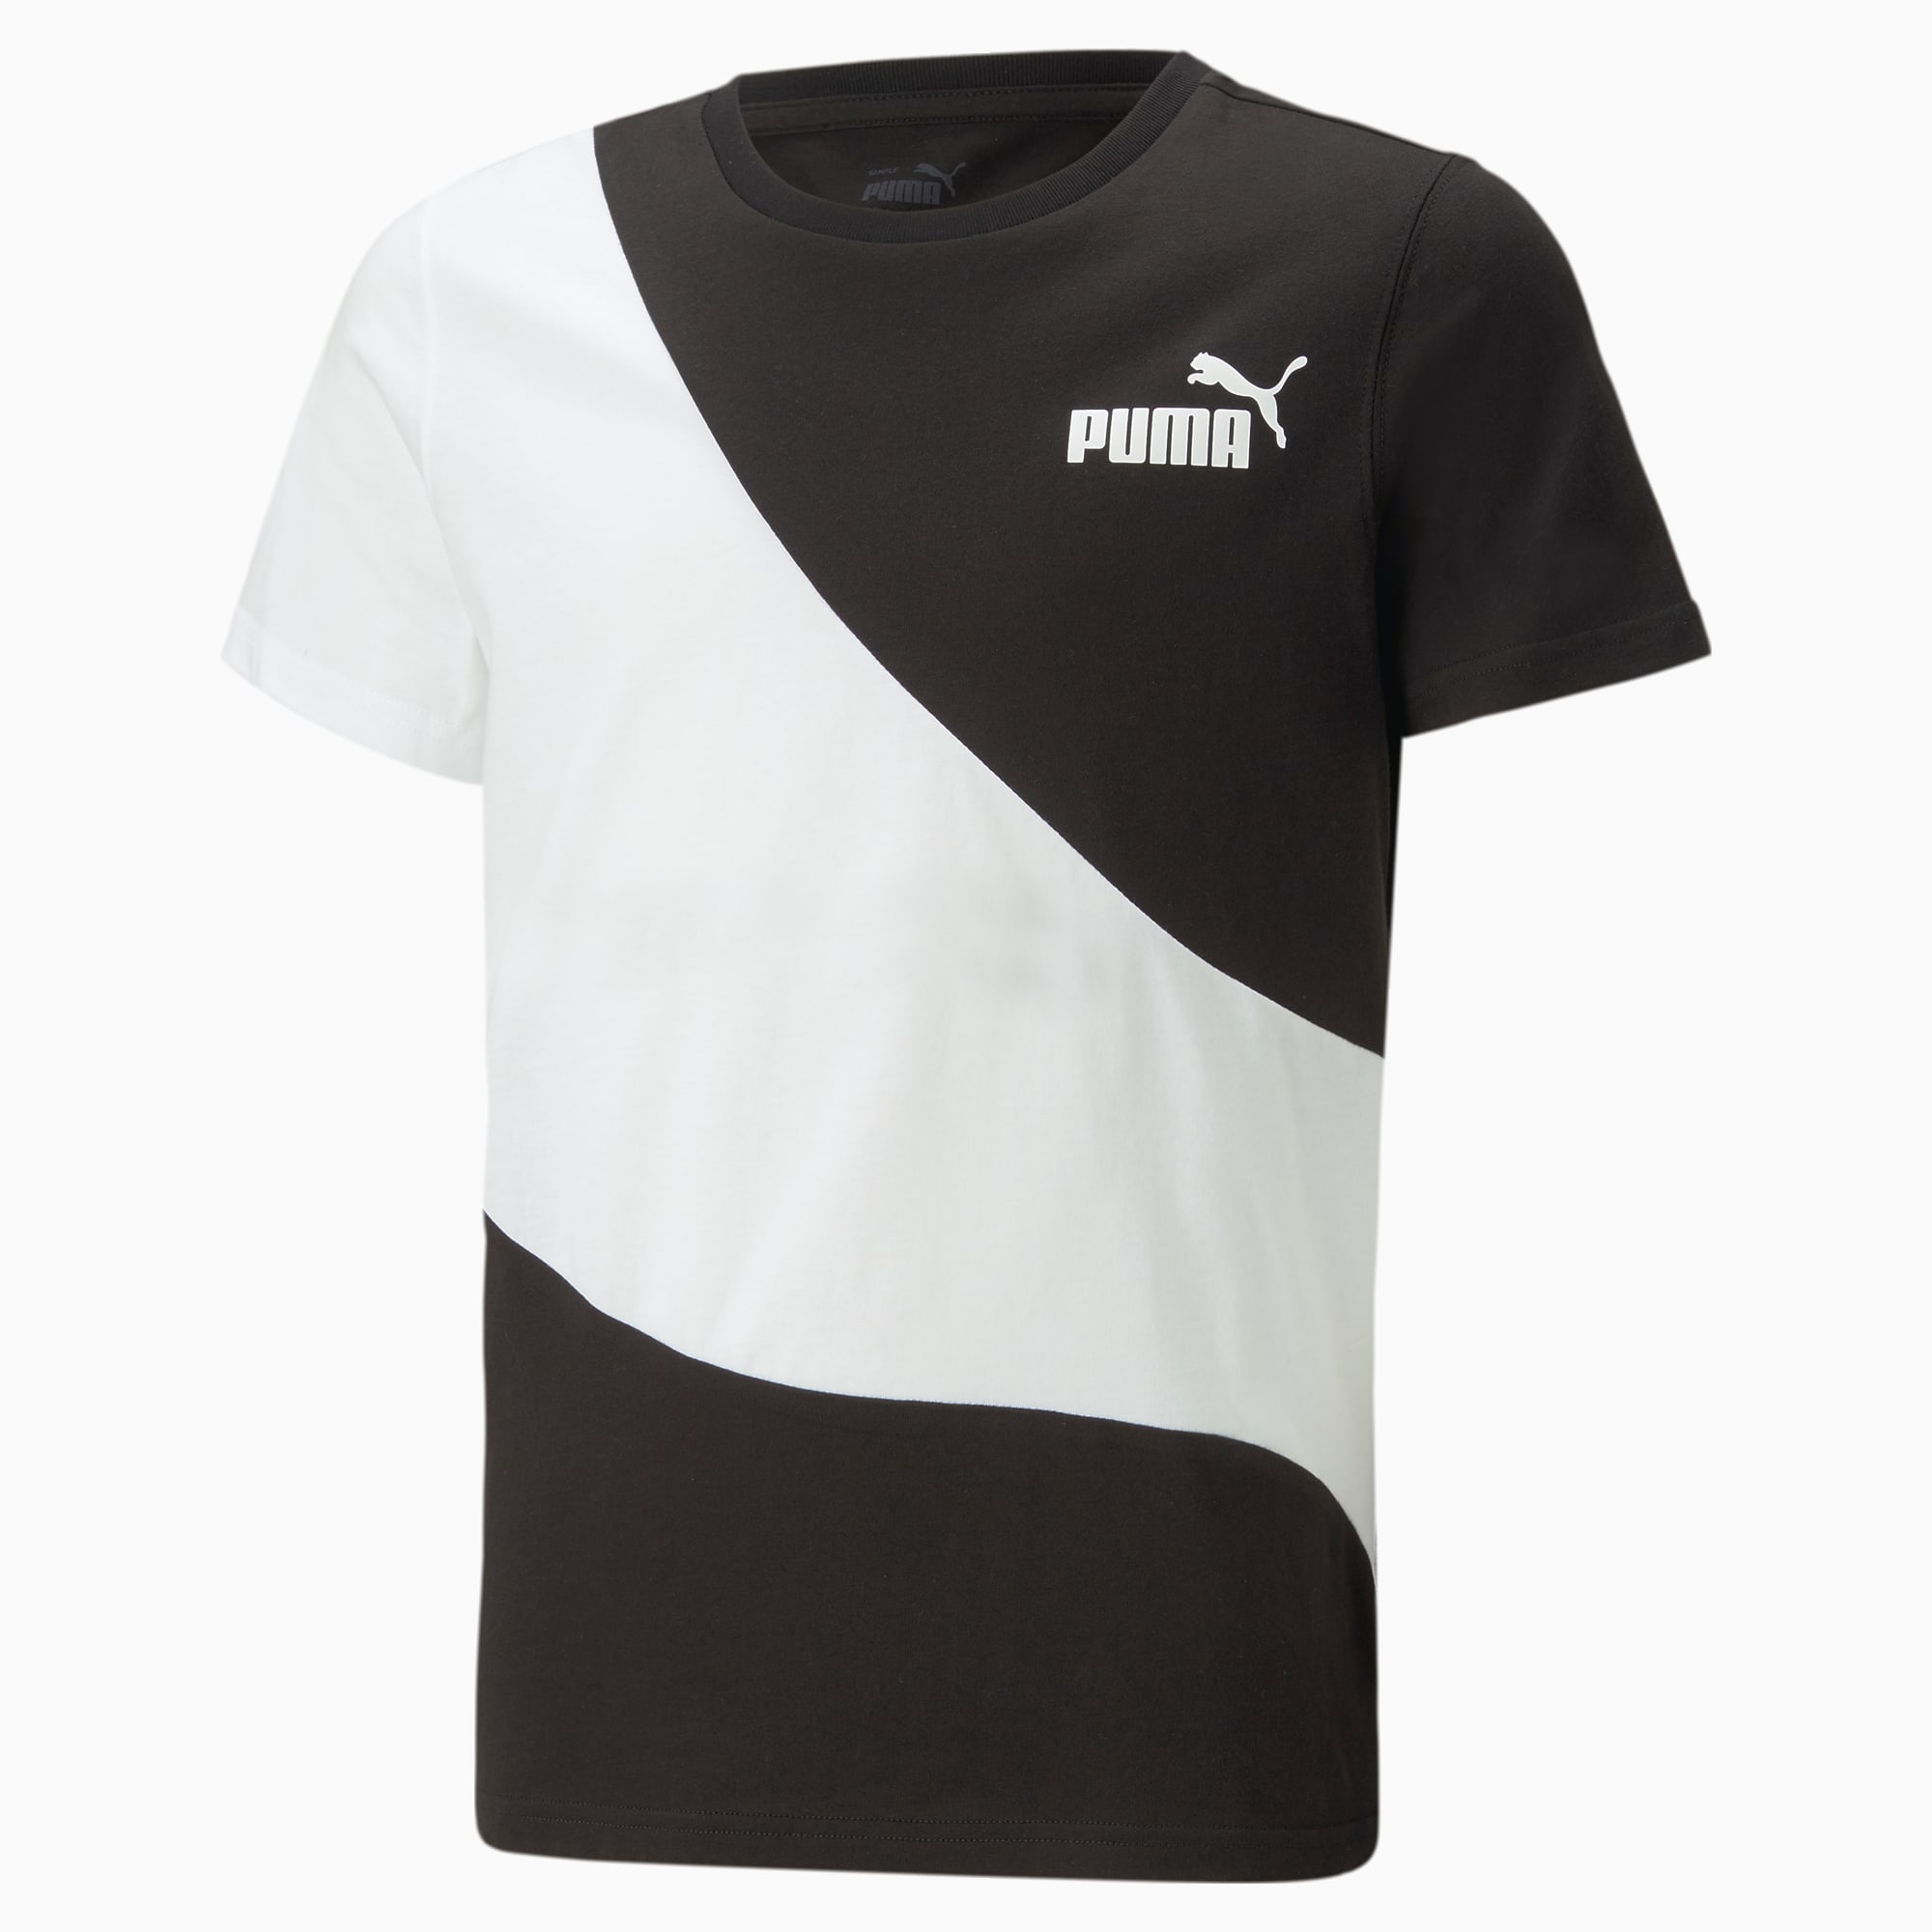 PUMA Power Cat T-Shirt Youth, Black